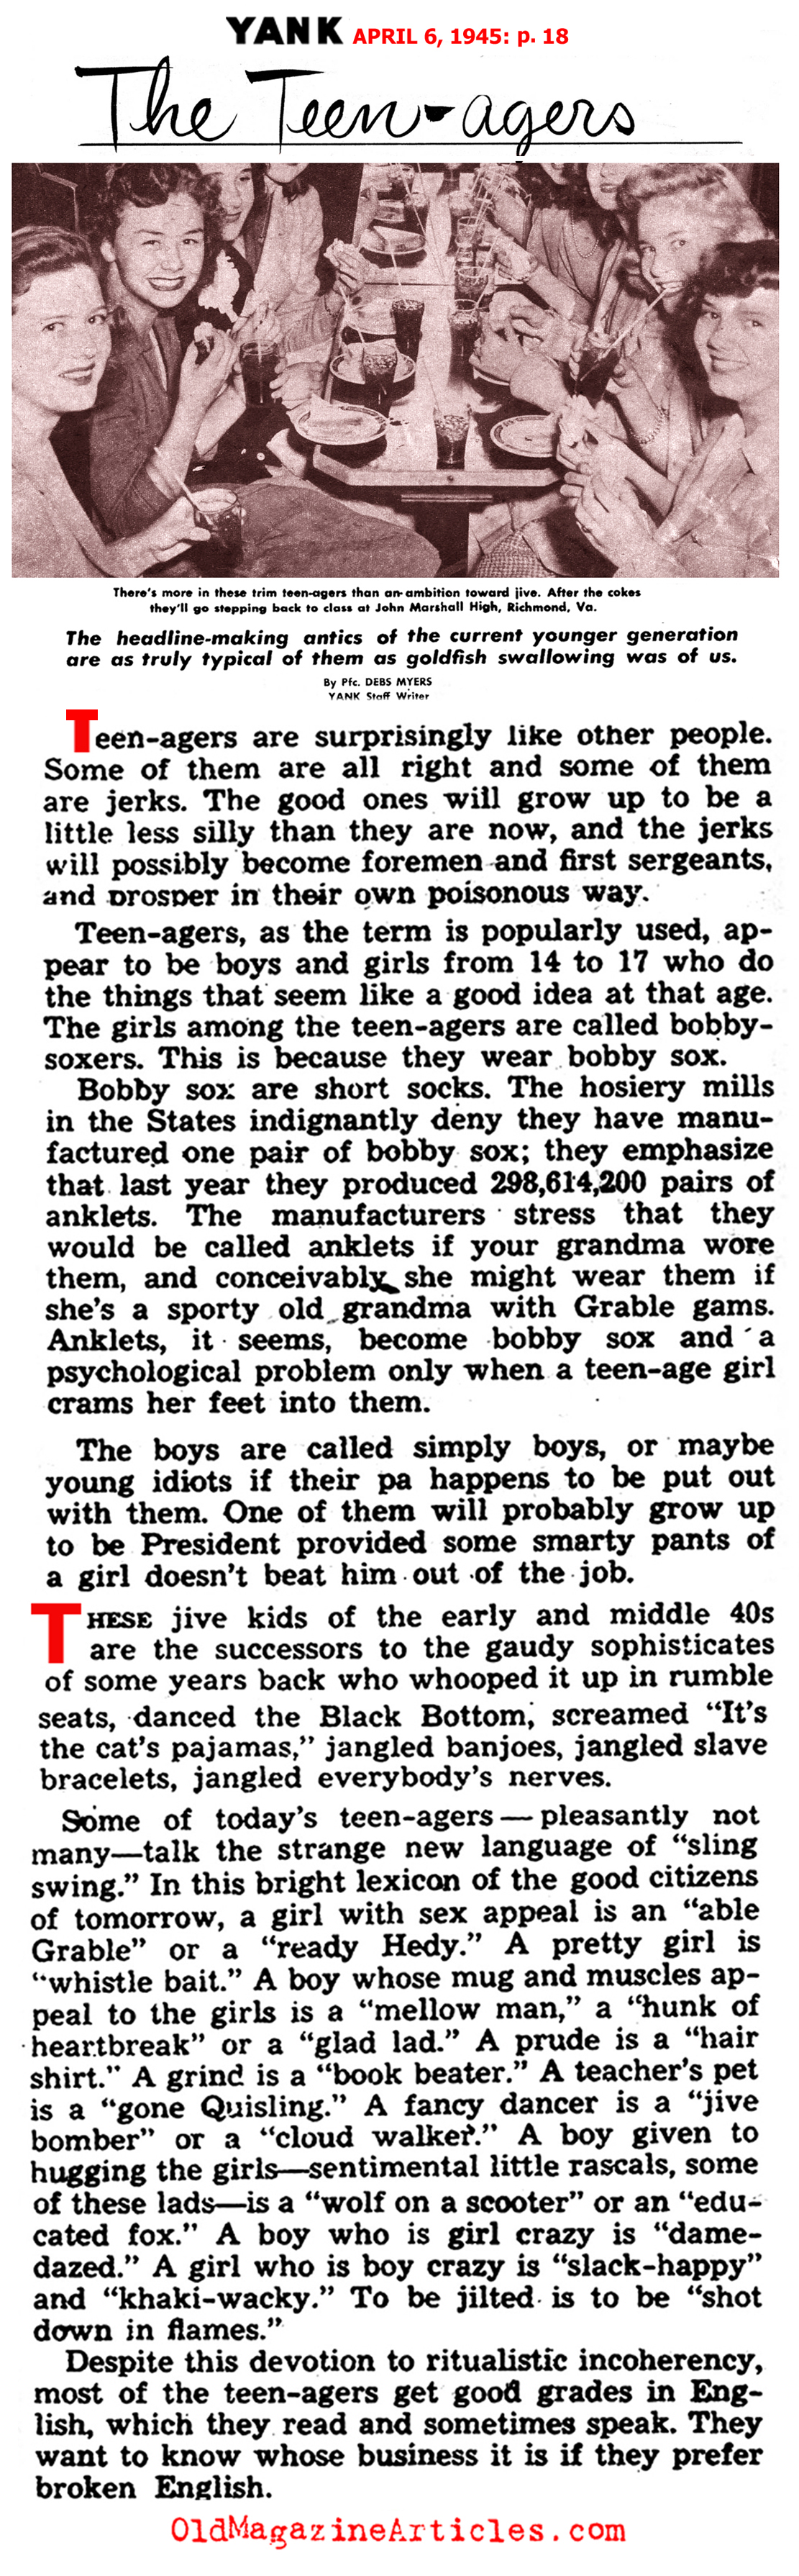 Teen Slang of the 1940s (Yank Magazine, 1945)